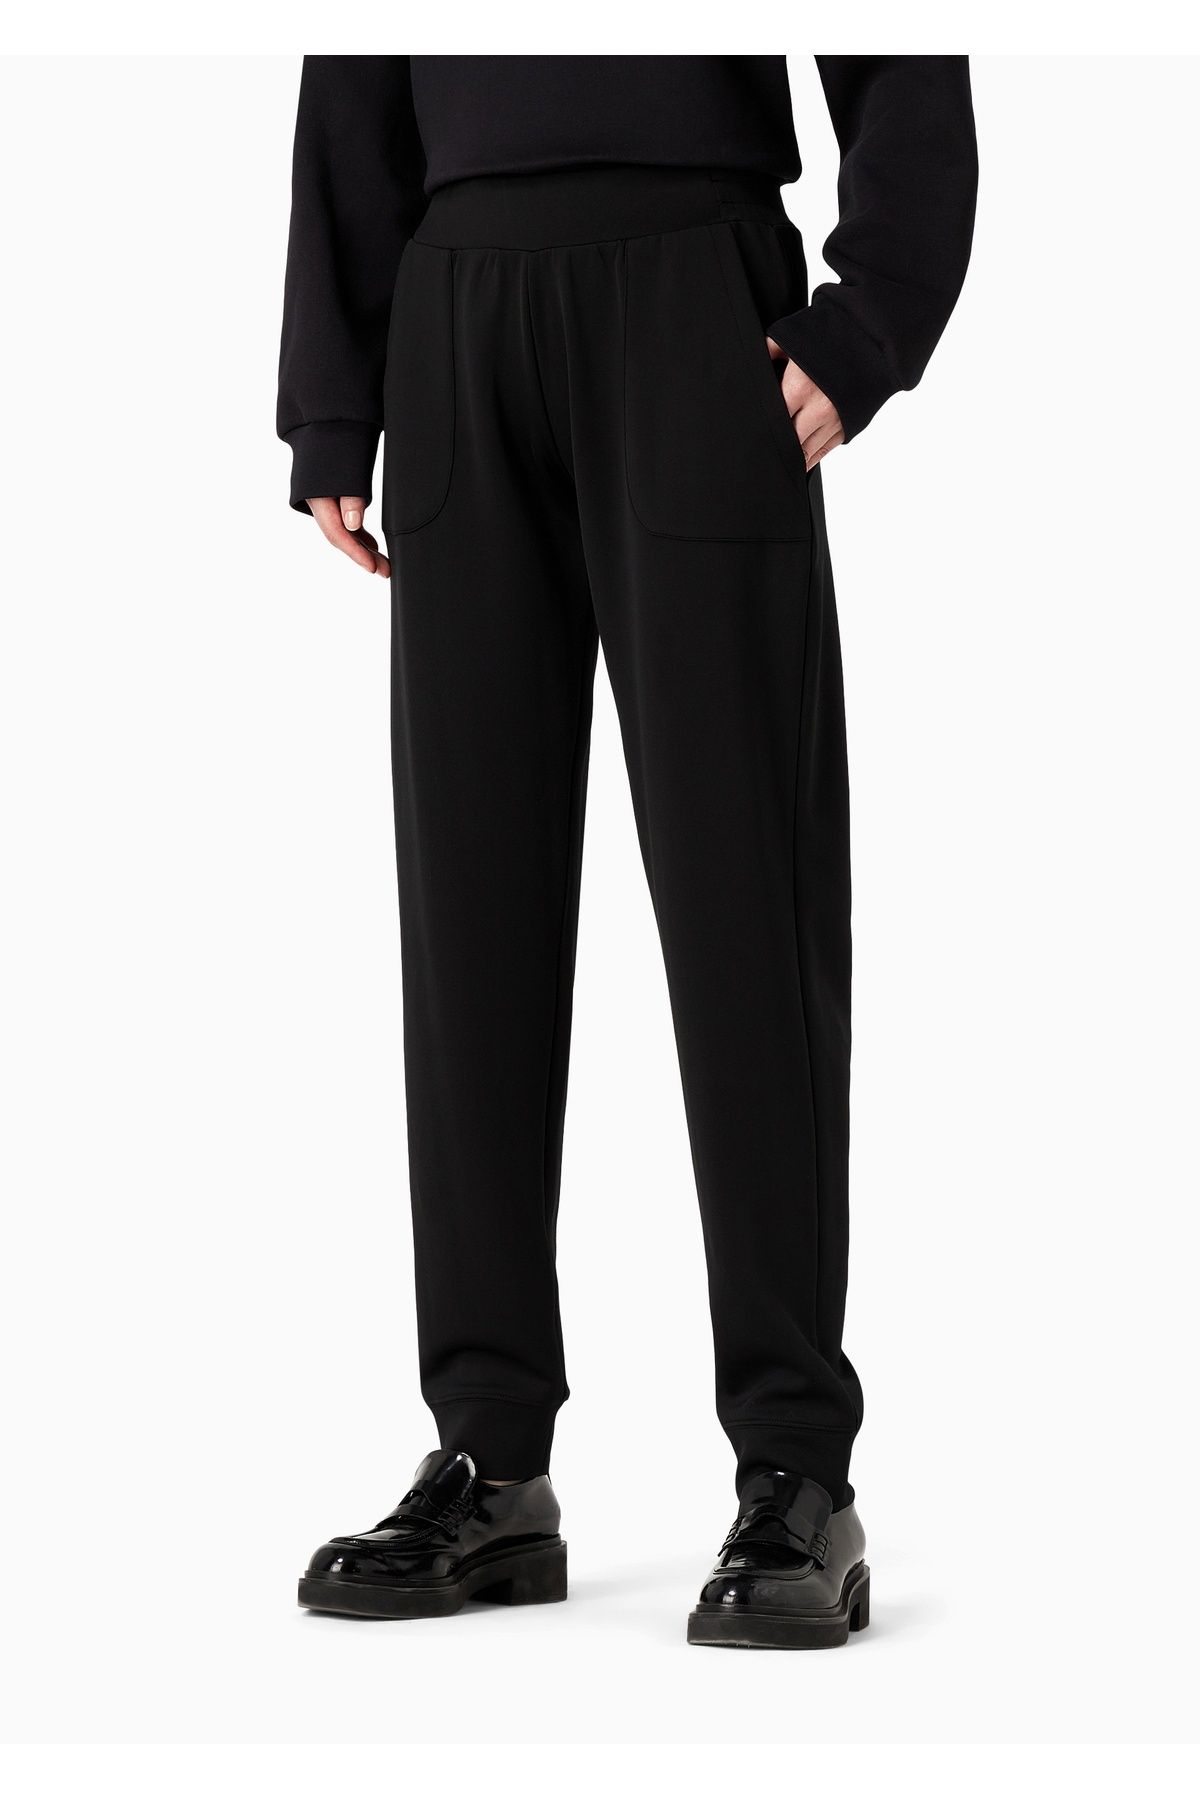 Emporio Armani Kadın Marka Logolu Pamuklu Normal Kalıp Günlük Siyah Pantolon 6R2P7D 2JXGZ-0999